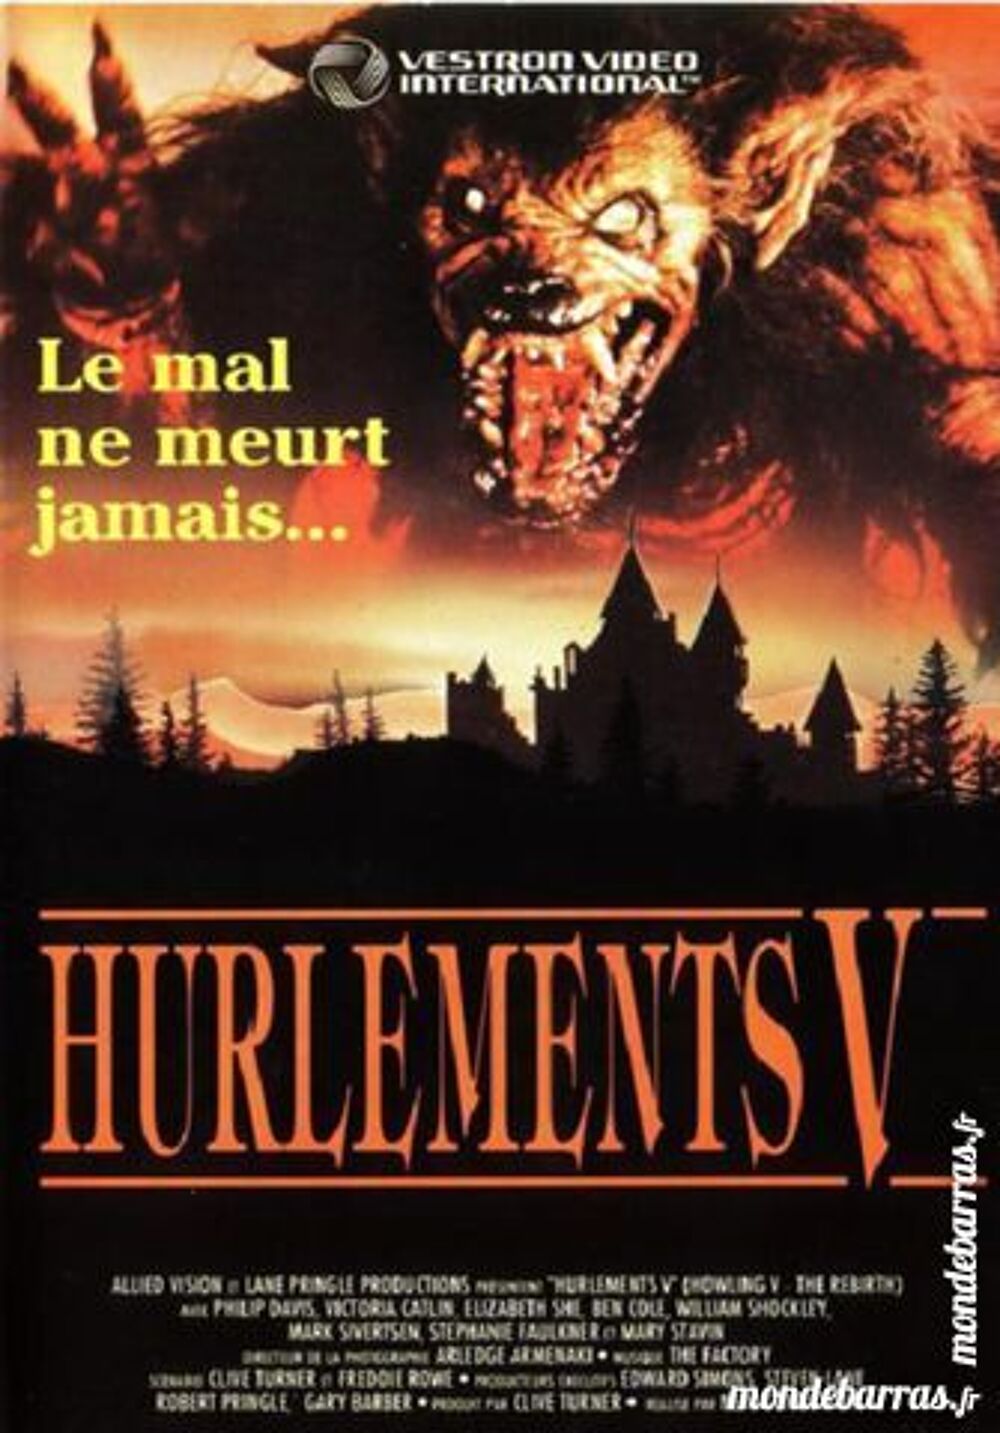 K7 Vhs: Hurlements 5 (67) DVD et blu-ray